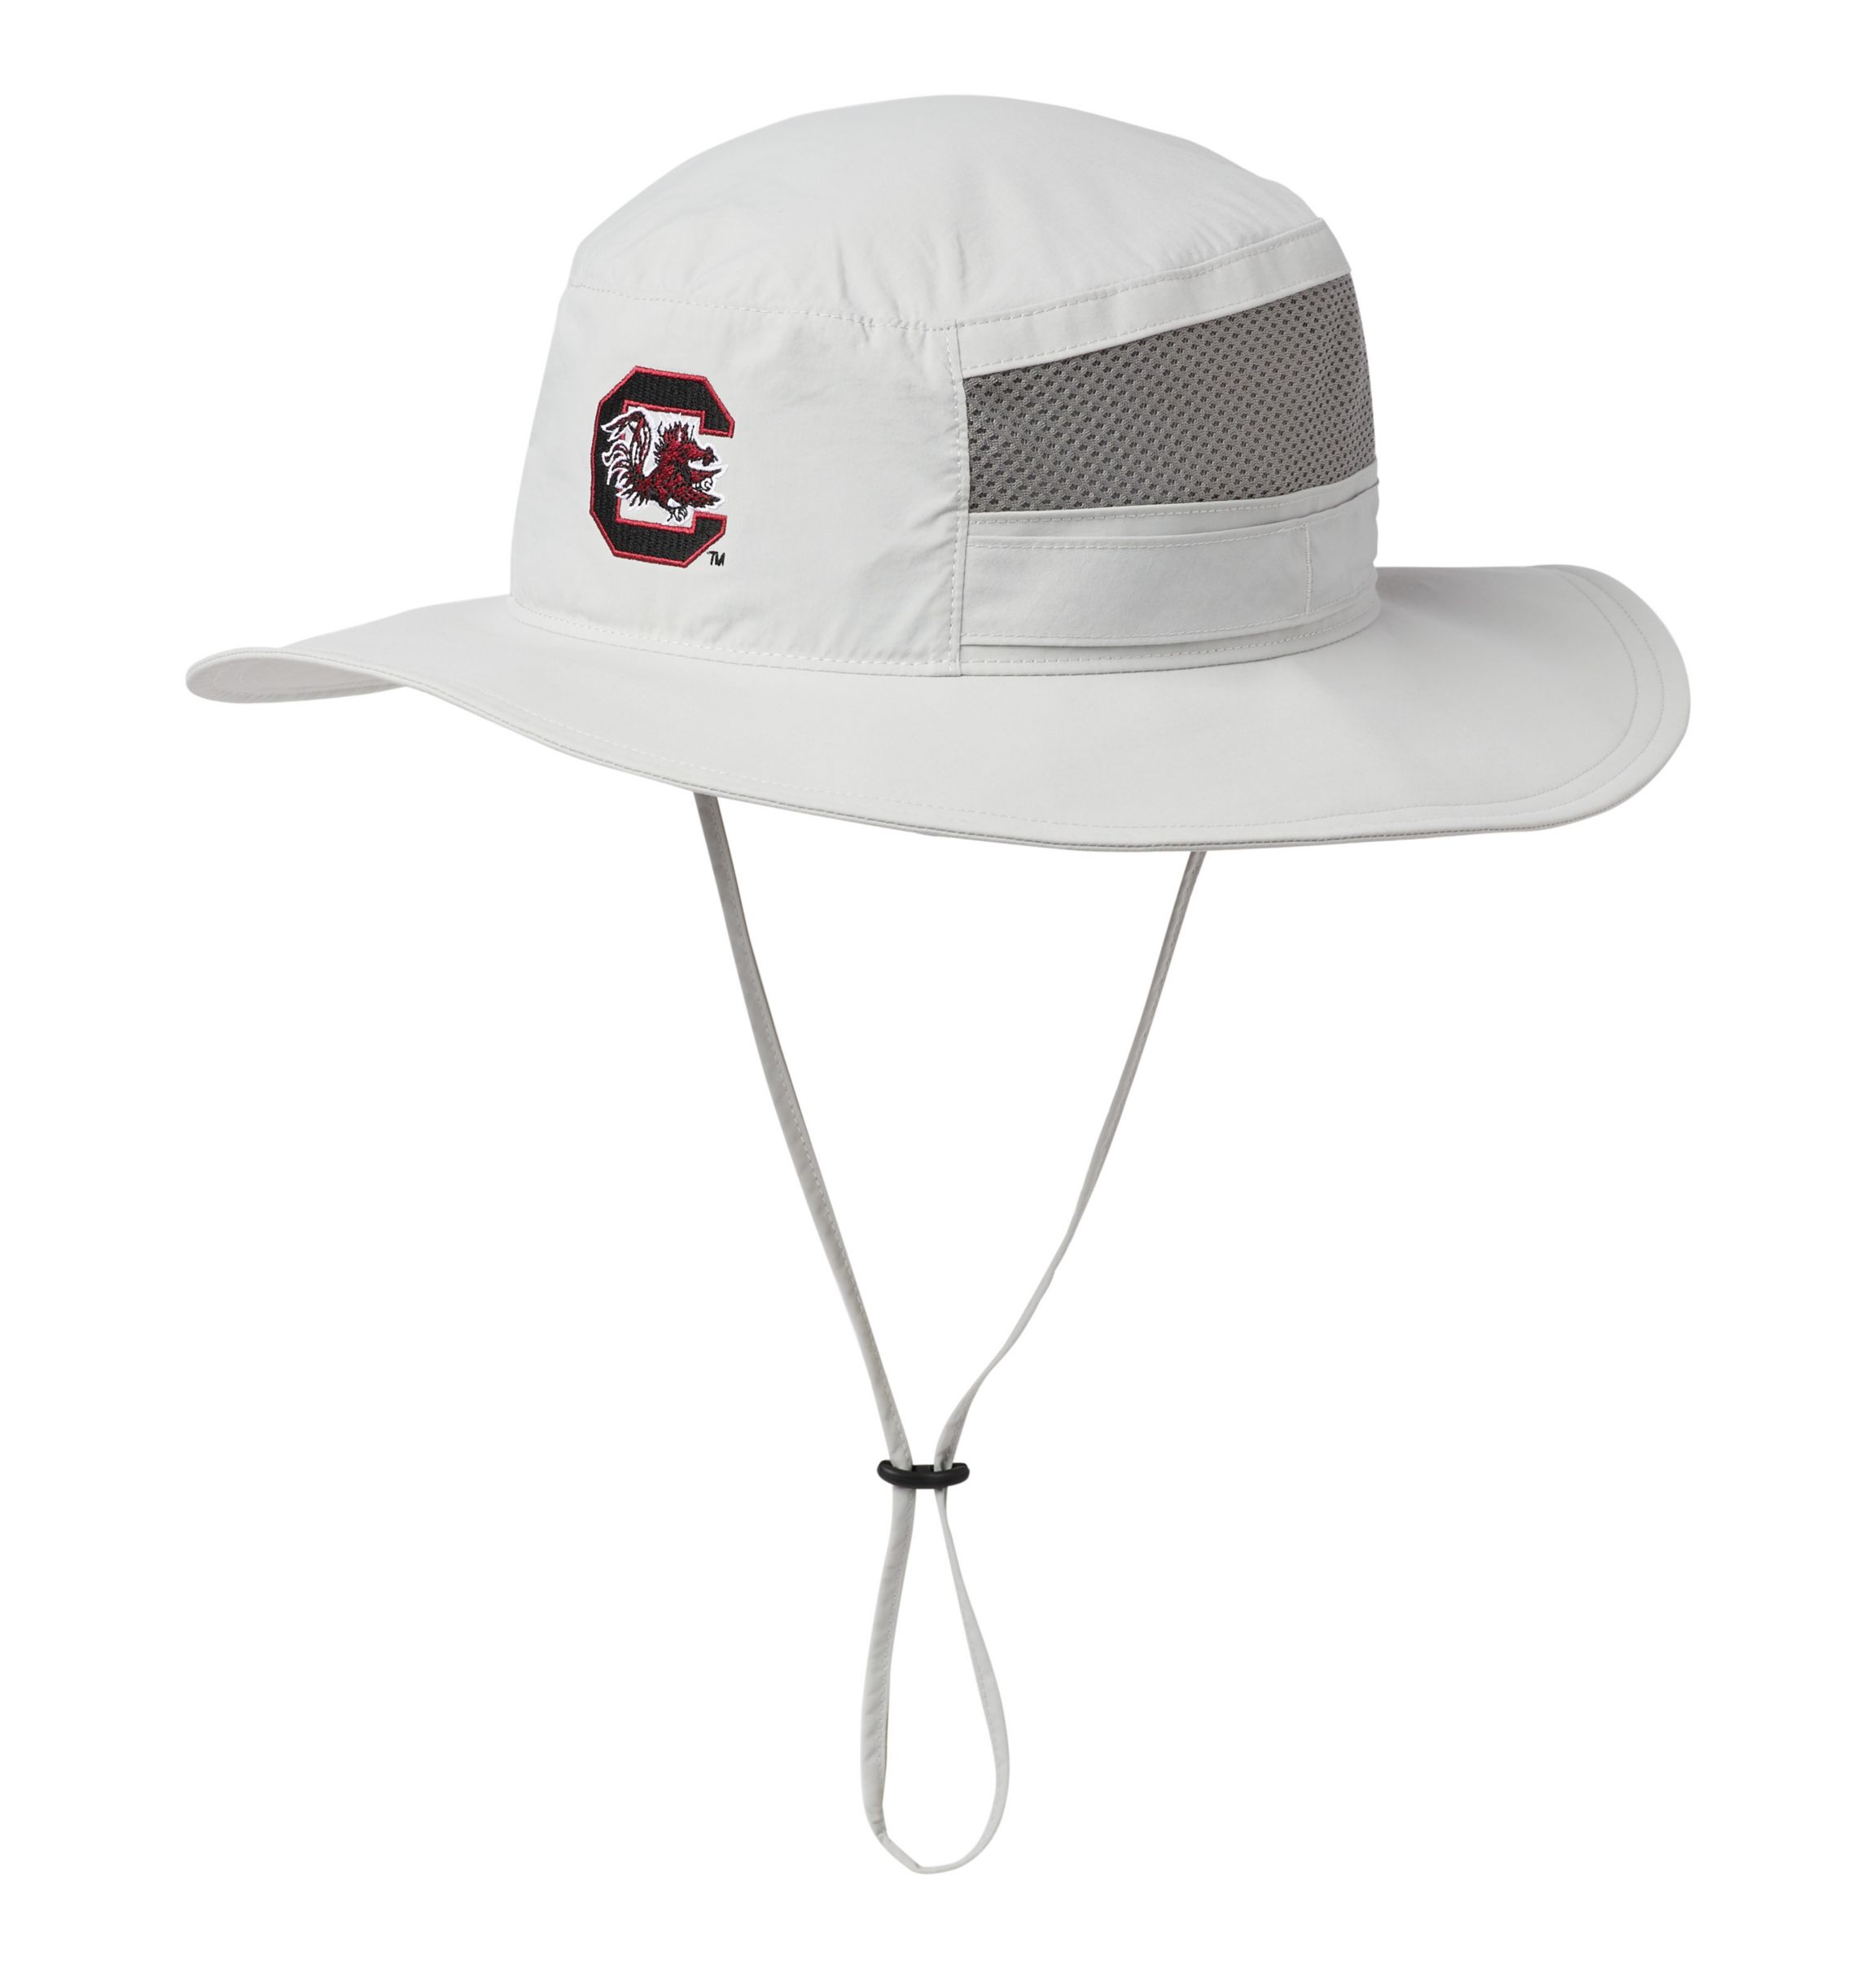 Columbia Sportswear Bora Bora II Booney Hat Sun Protection